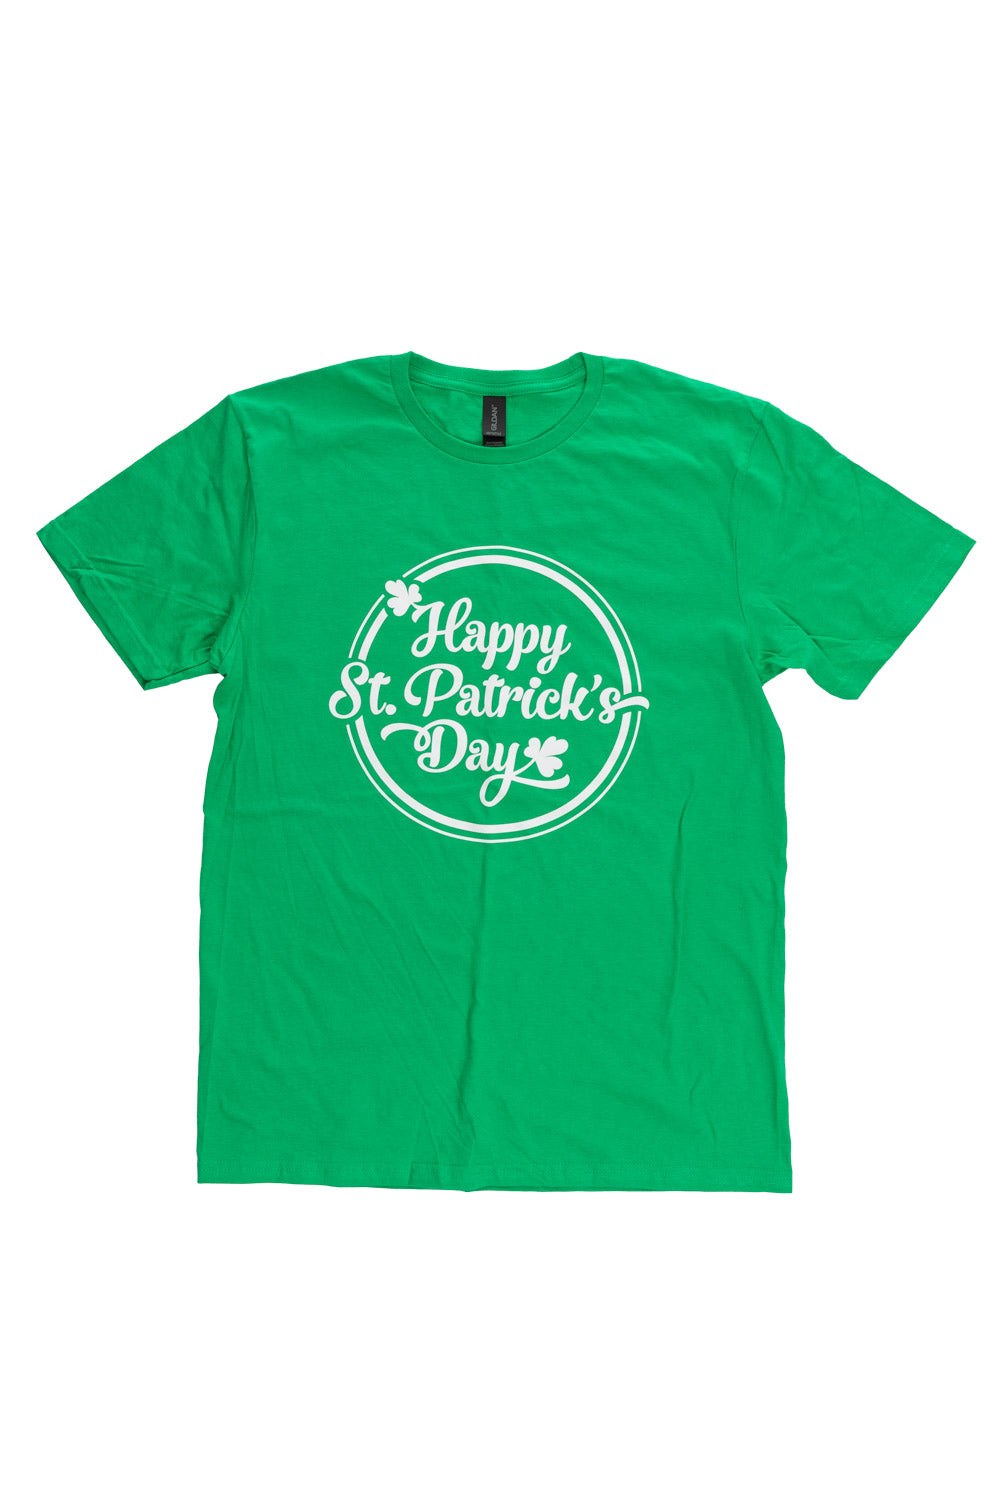 "Happy St. Patrick's Day" T-Shirt - Unisex St. Patrick's Day Shirt